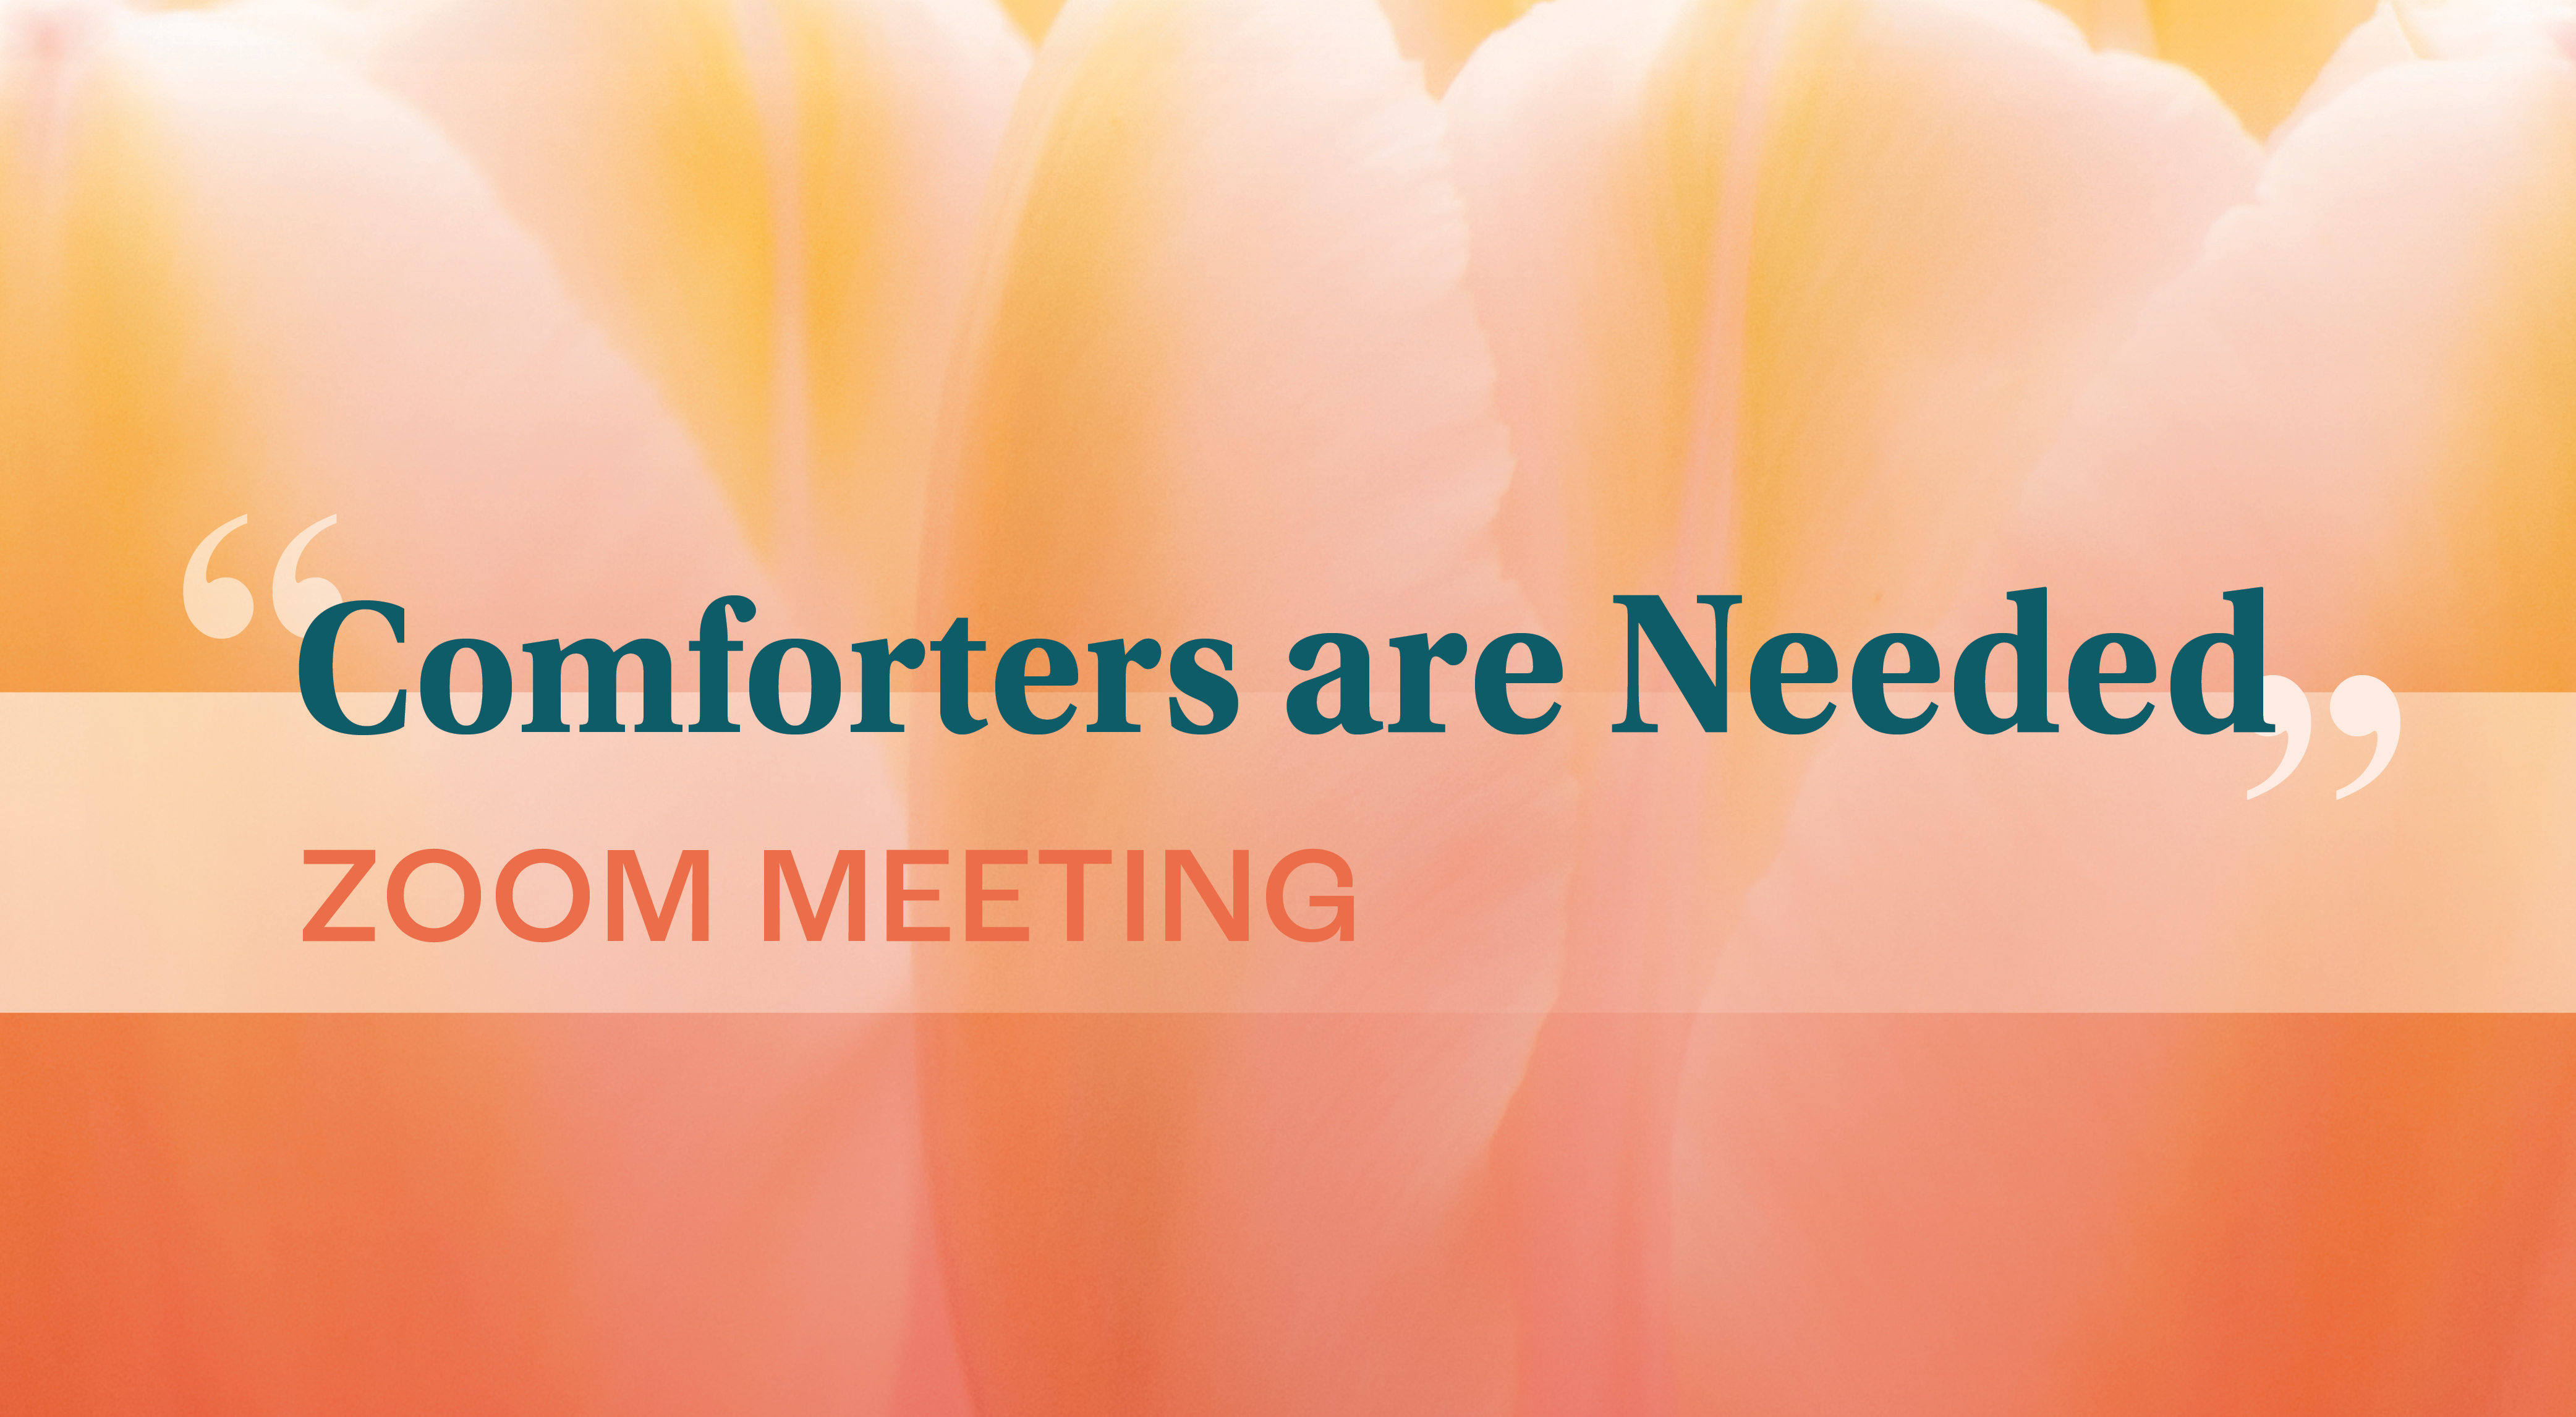 “Comforters are Needed” Zoom meeting